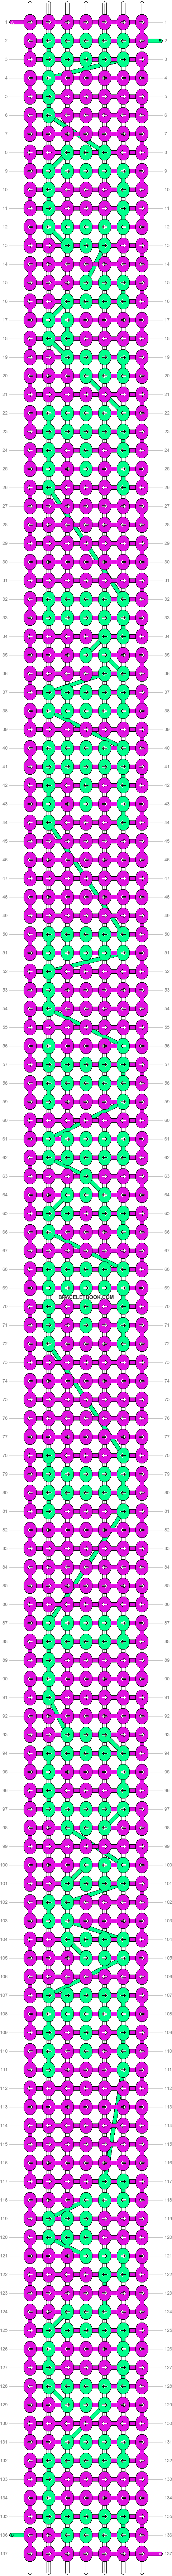 Alpha pattern #5298 pattern